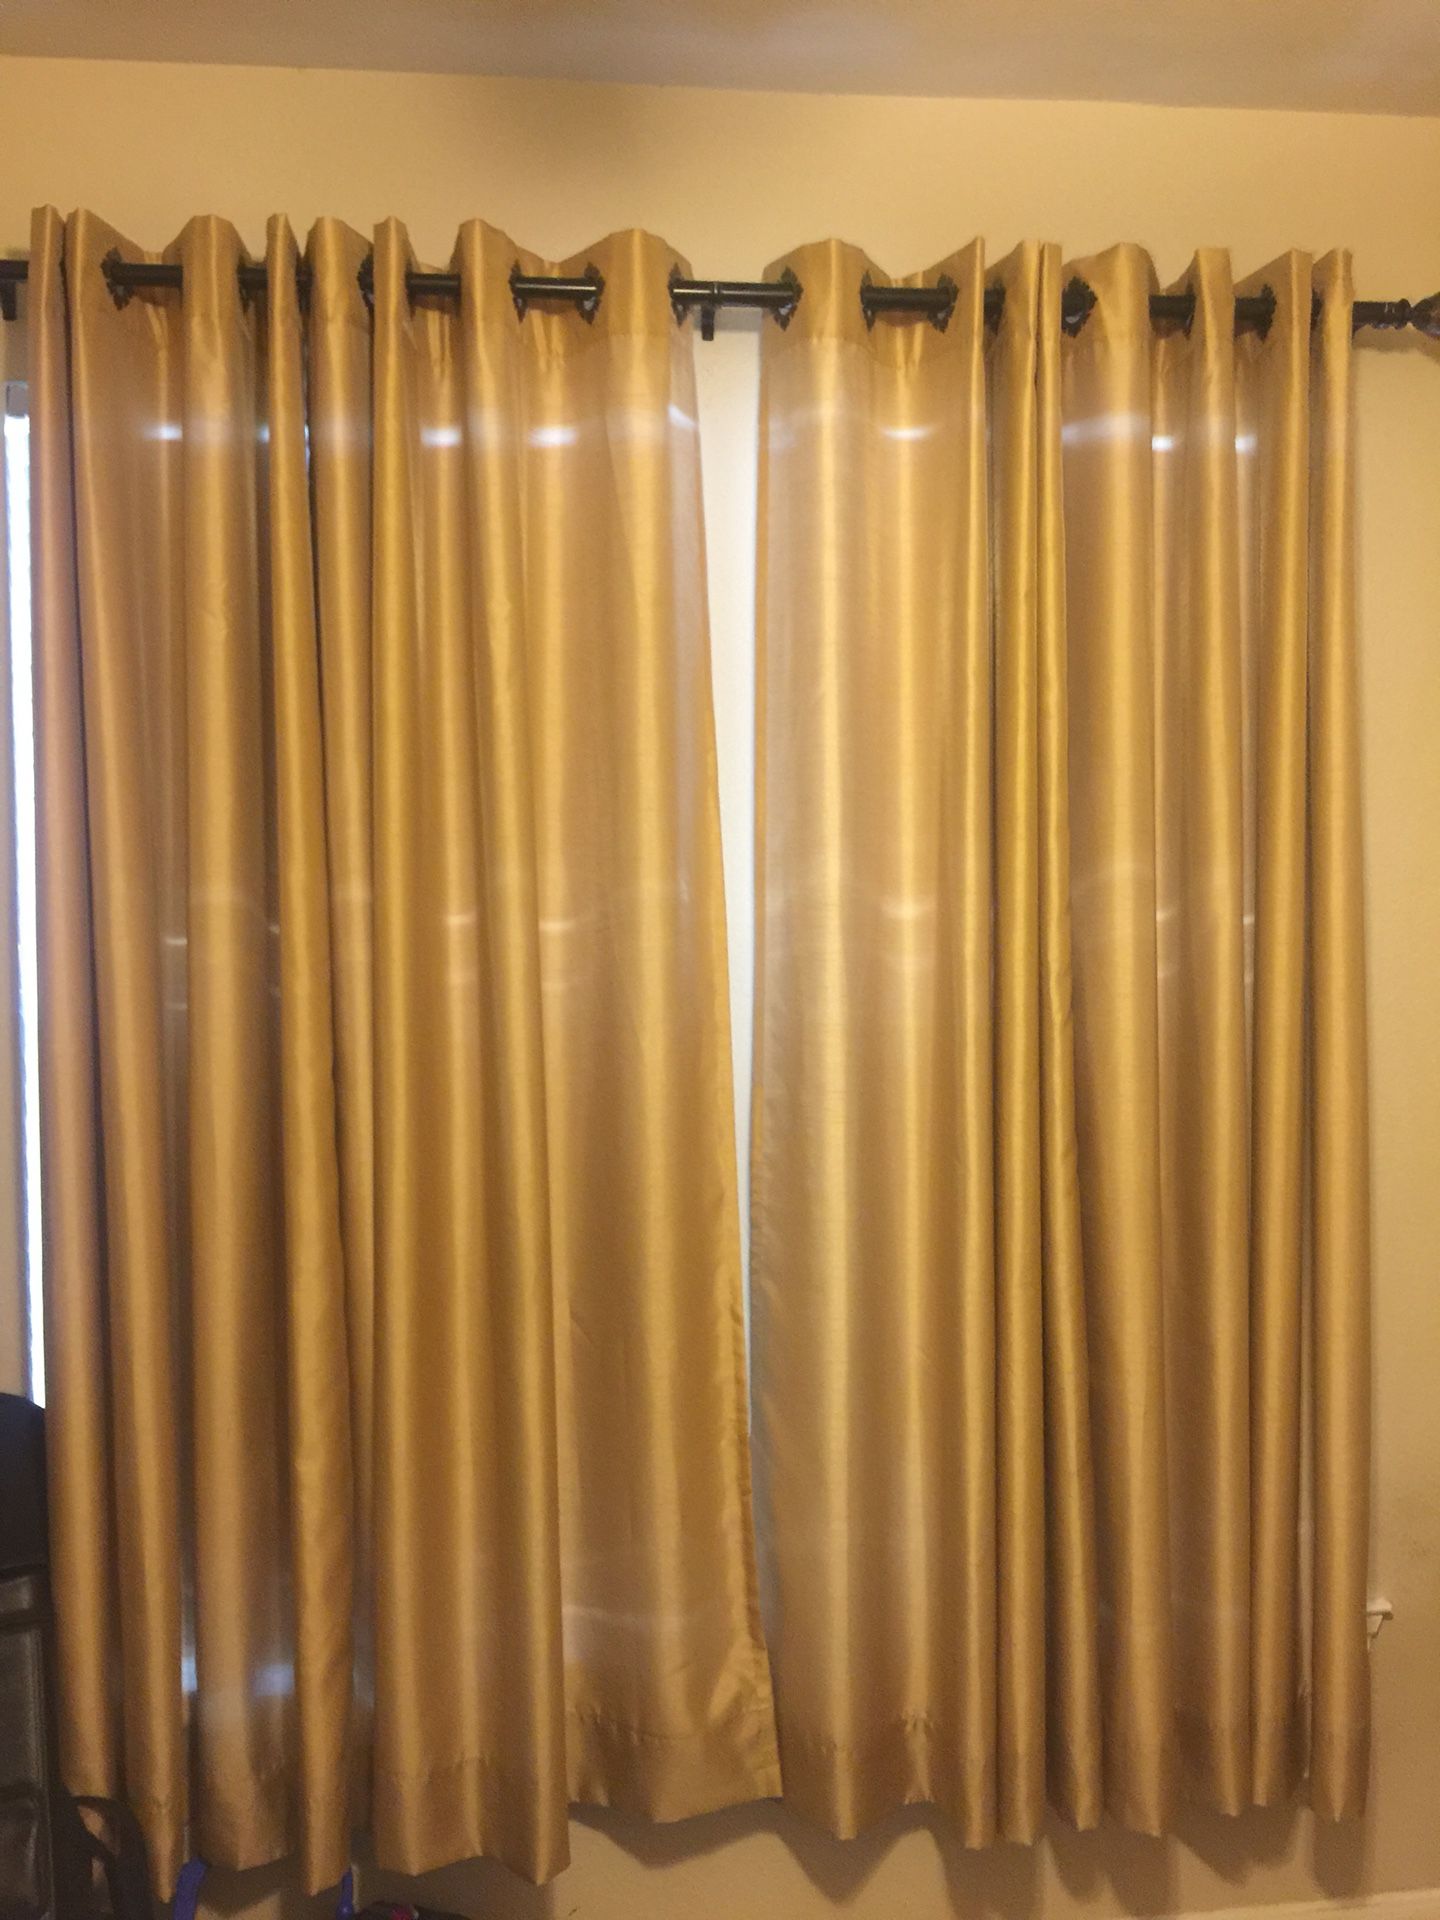 Curtains and Curtain Rod